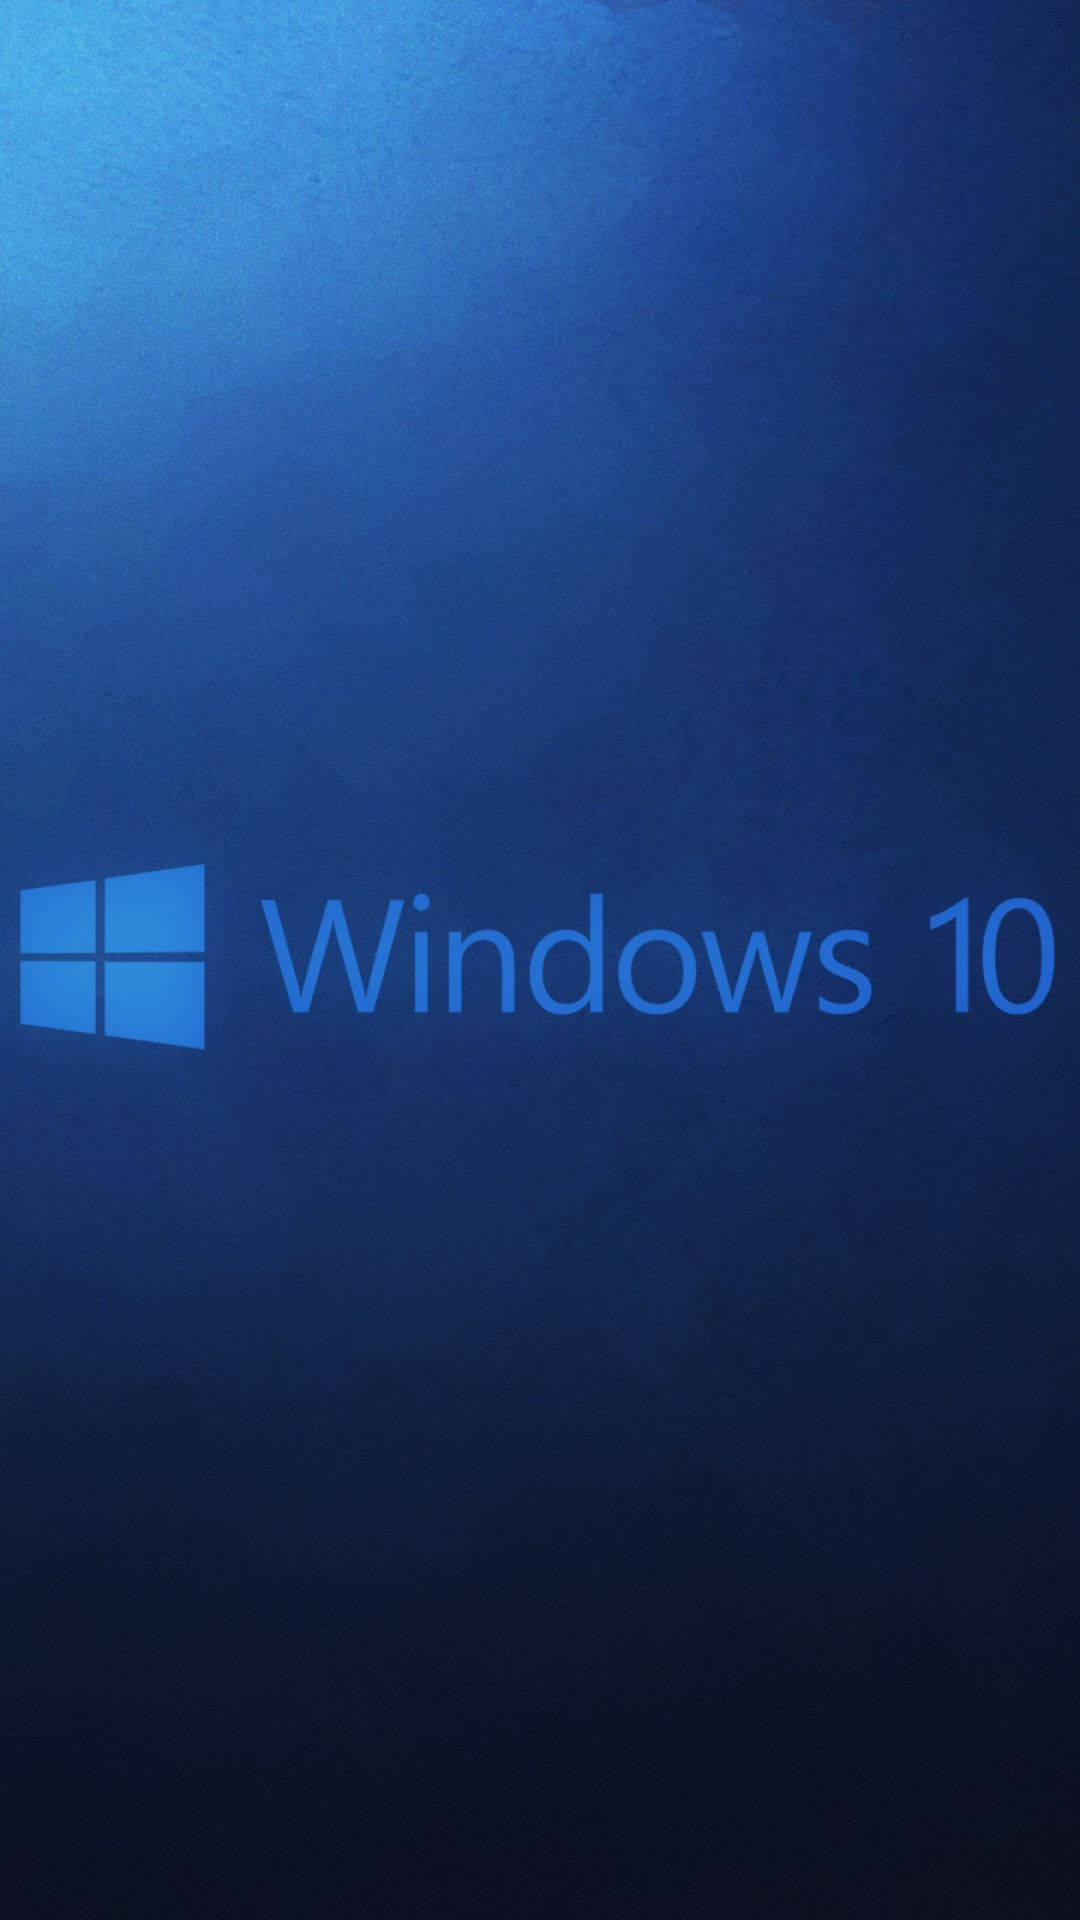 Microsoft Windows 10 Blue Cover Wallpaper